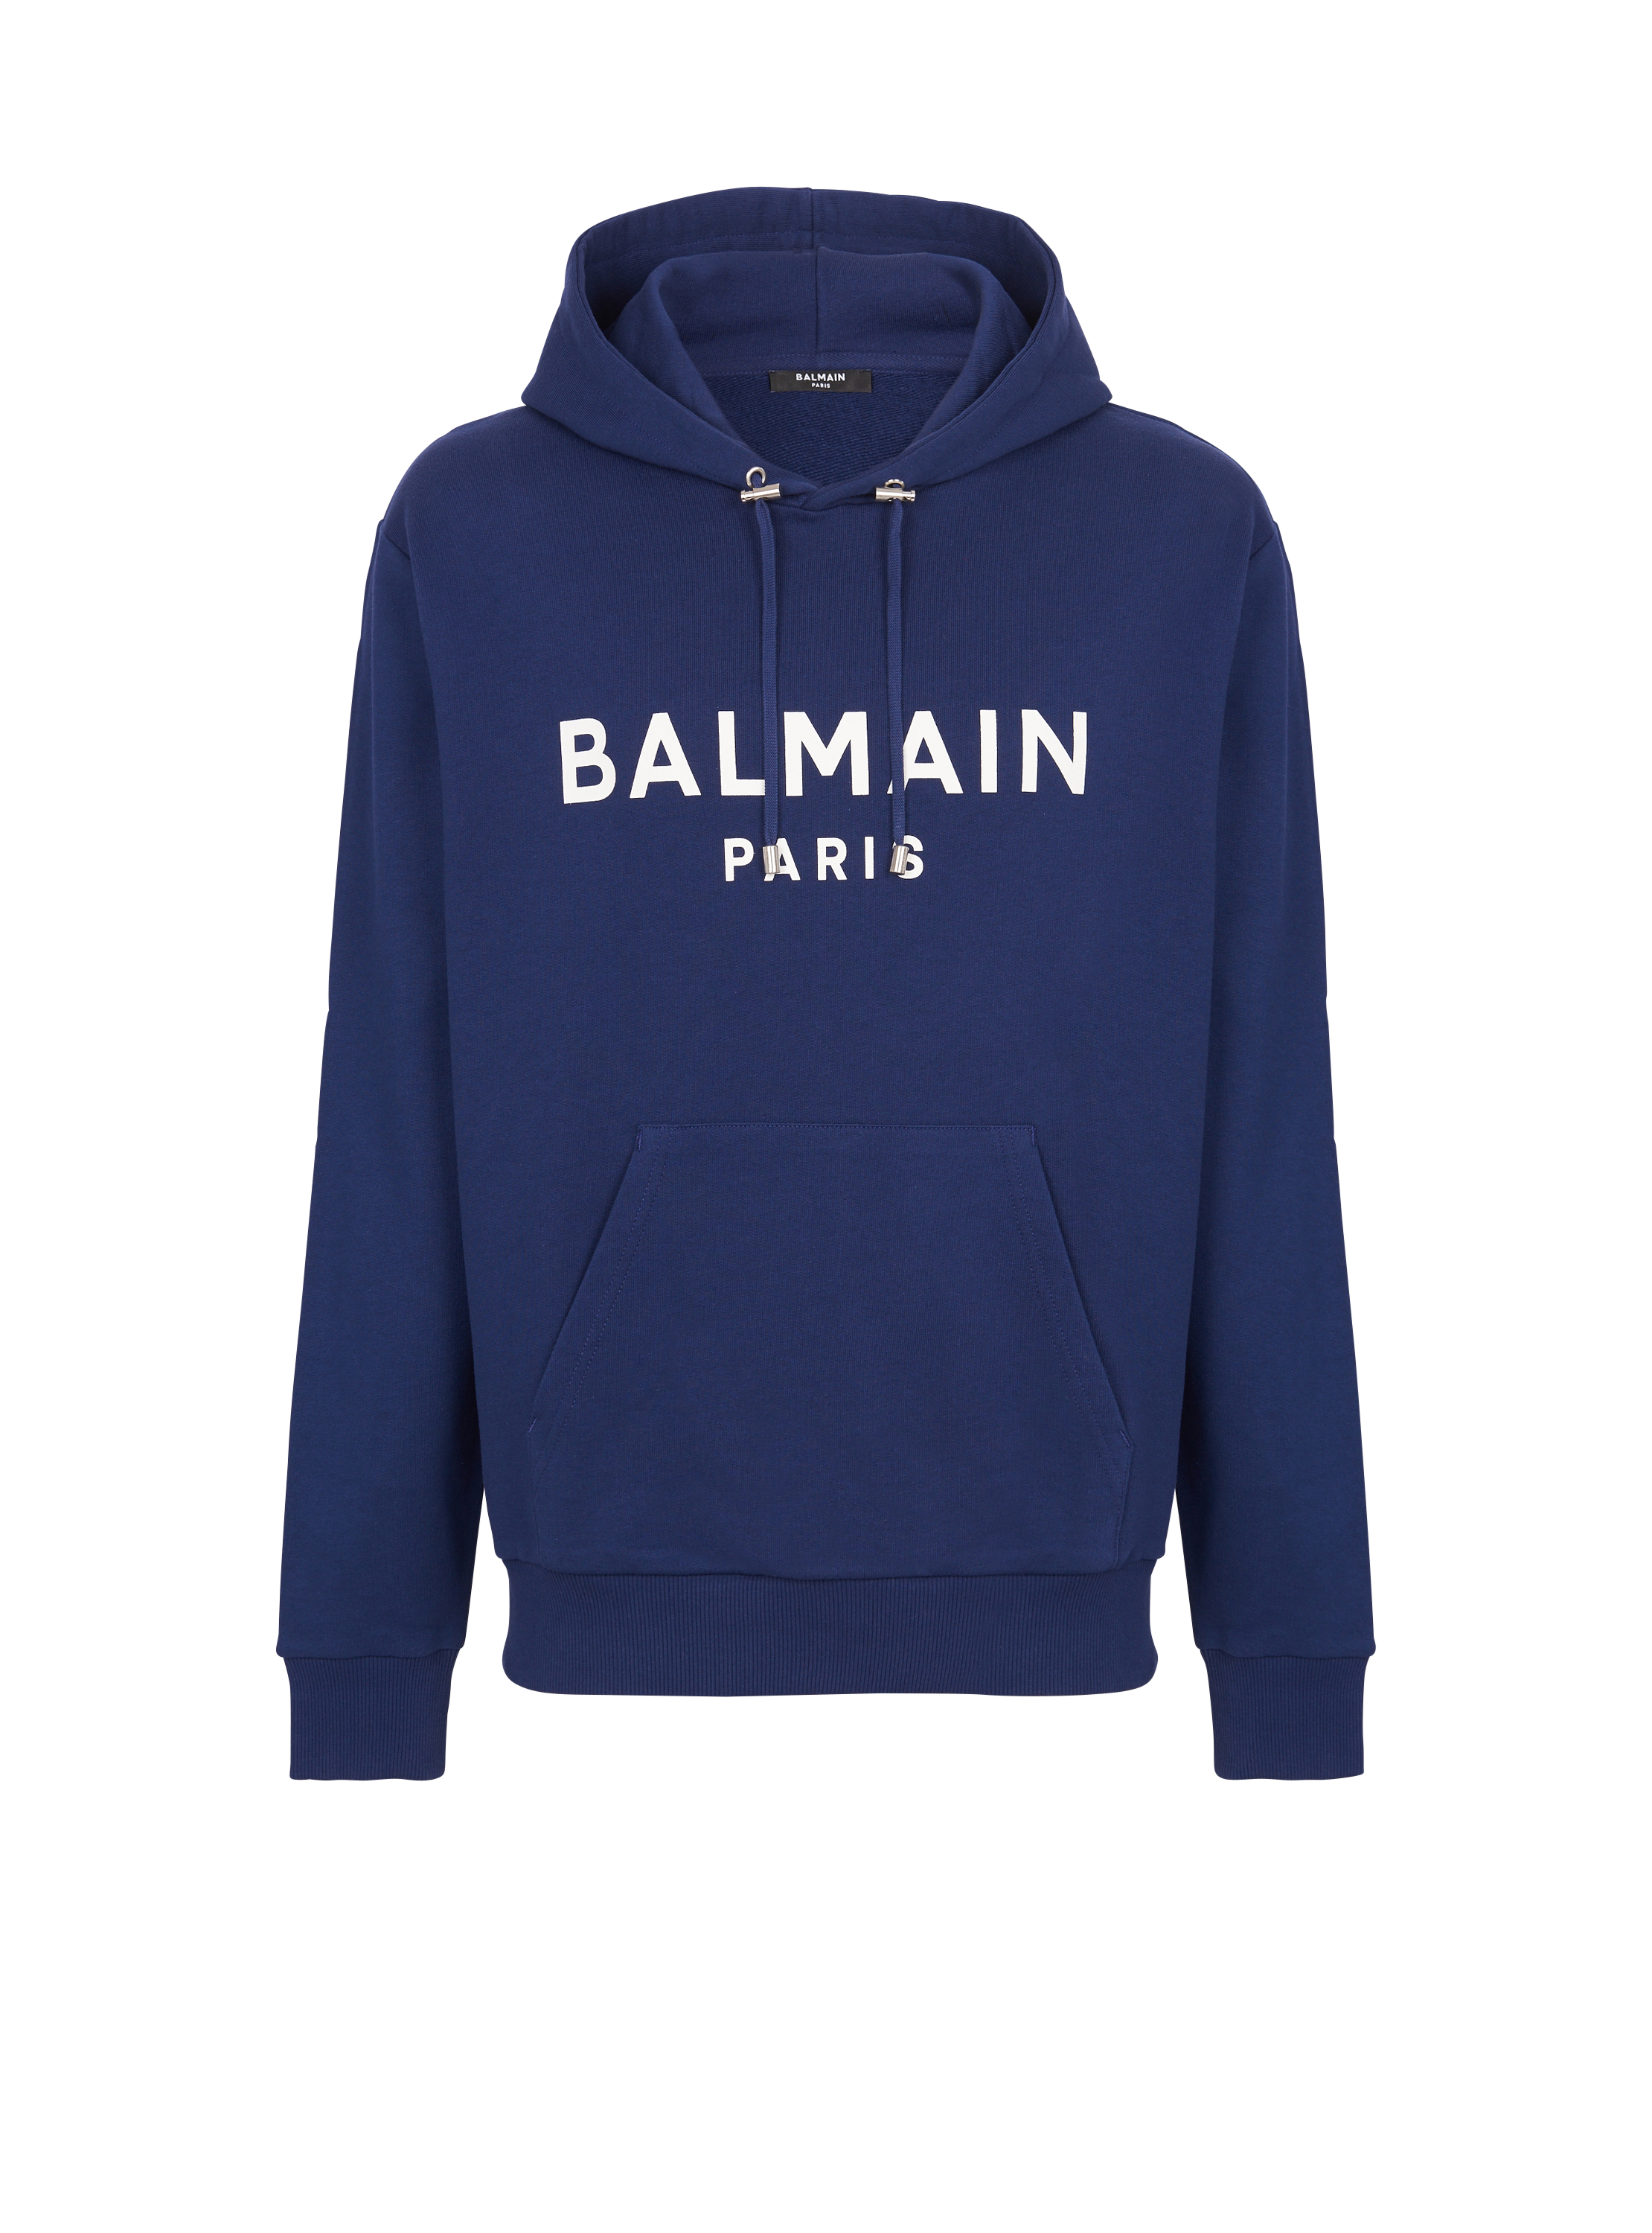 Balmain Paris hooded sweatshirt, navy, hi-res